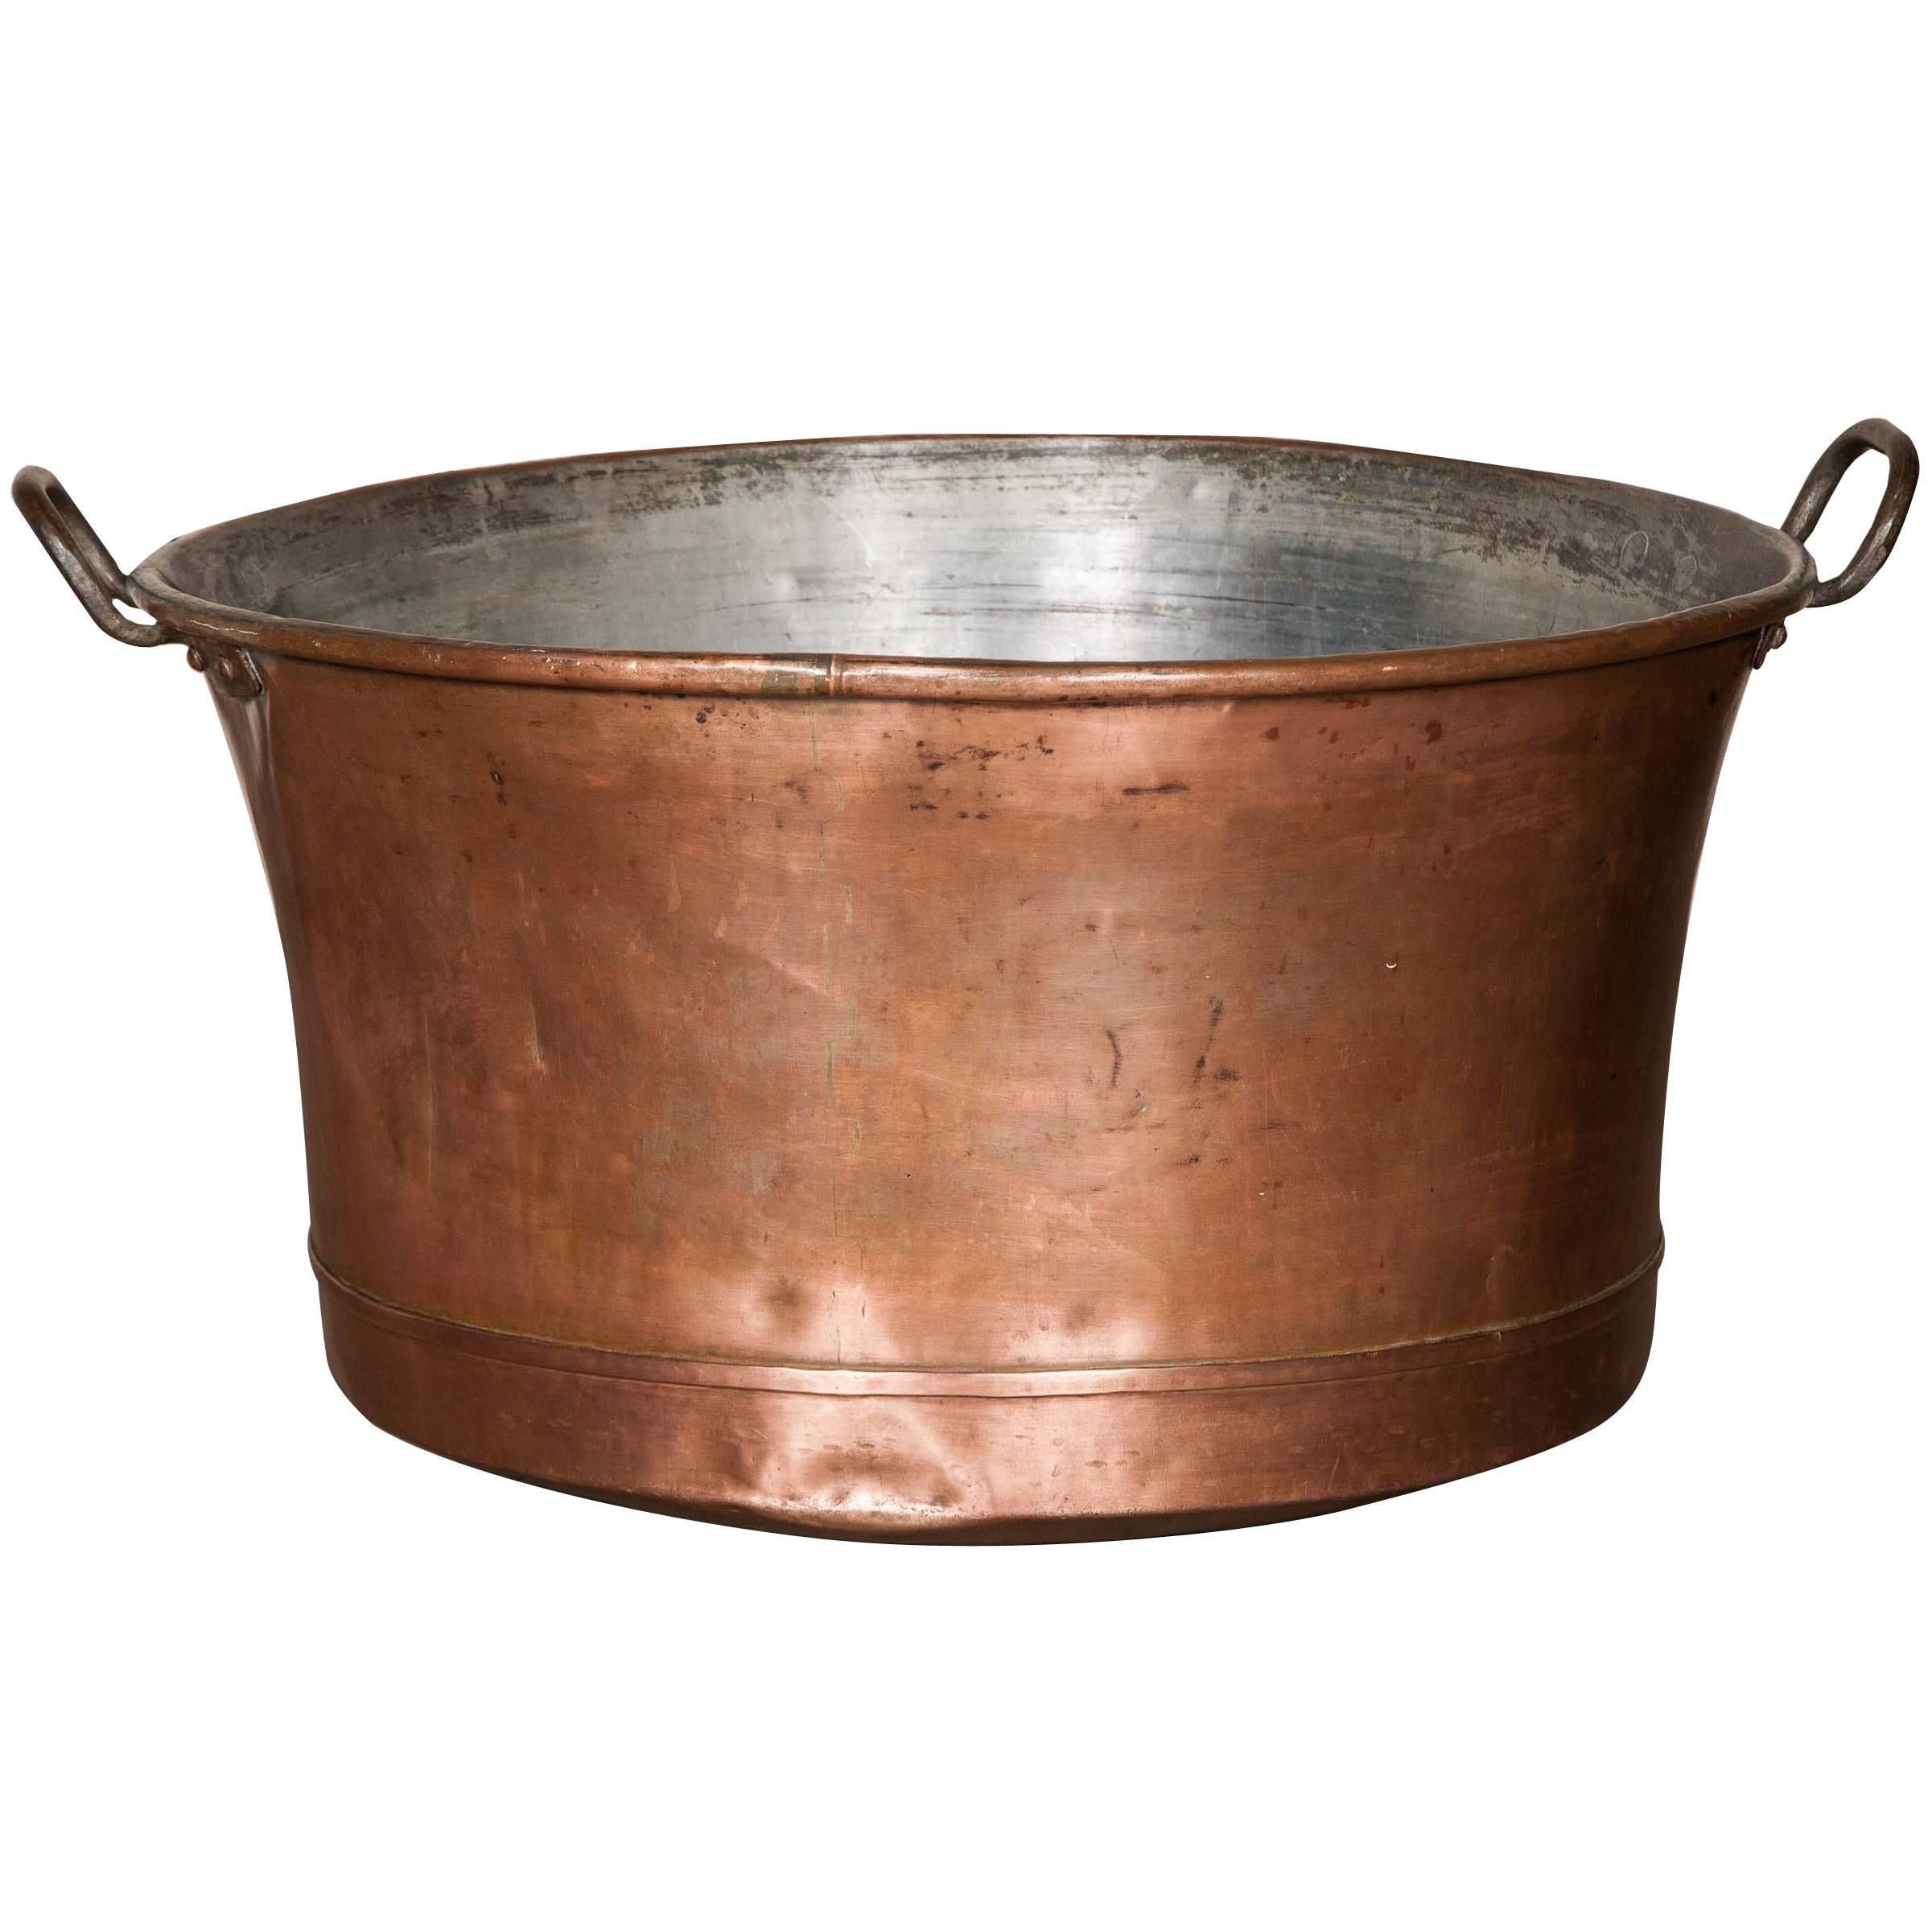 Original Antique Polished Copper Cooking Pot For Sale